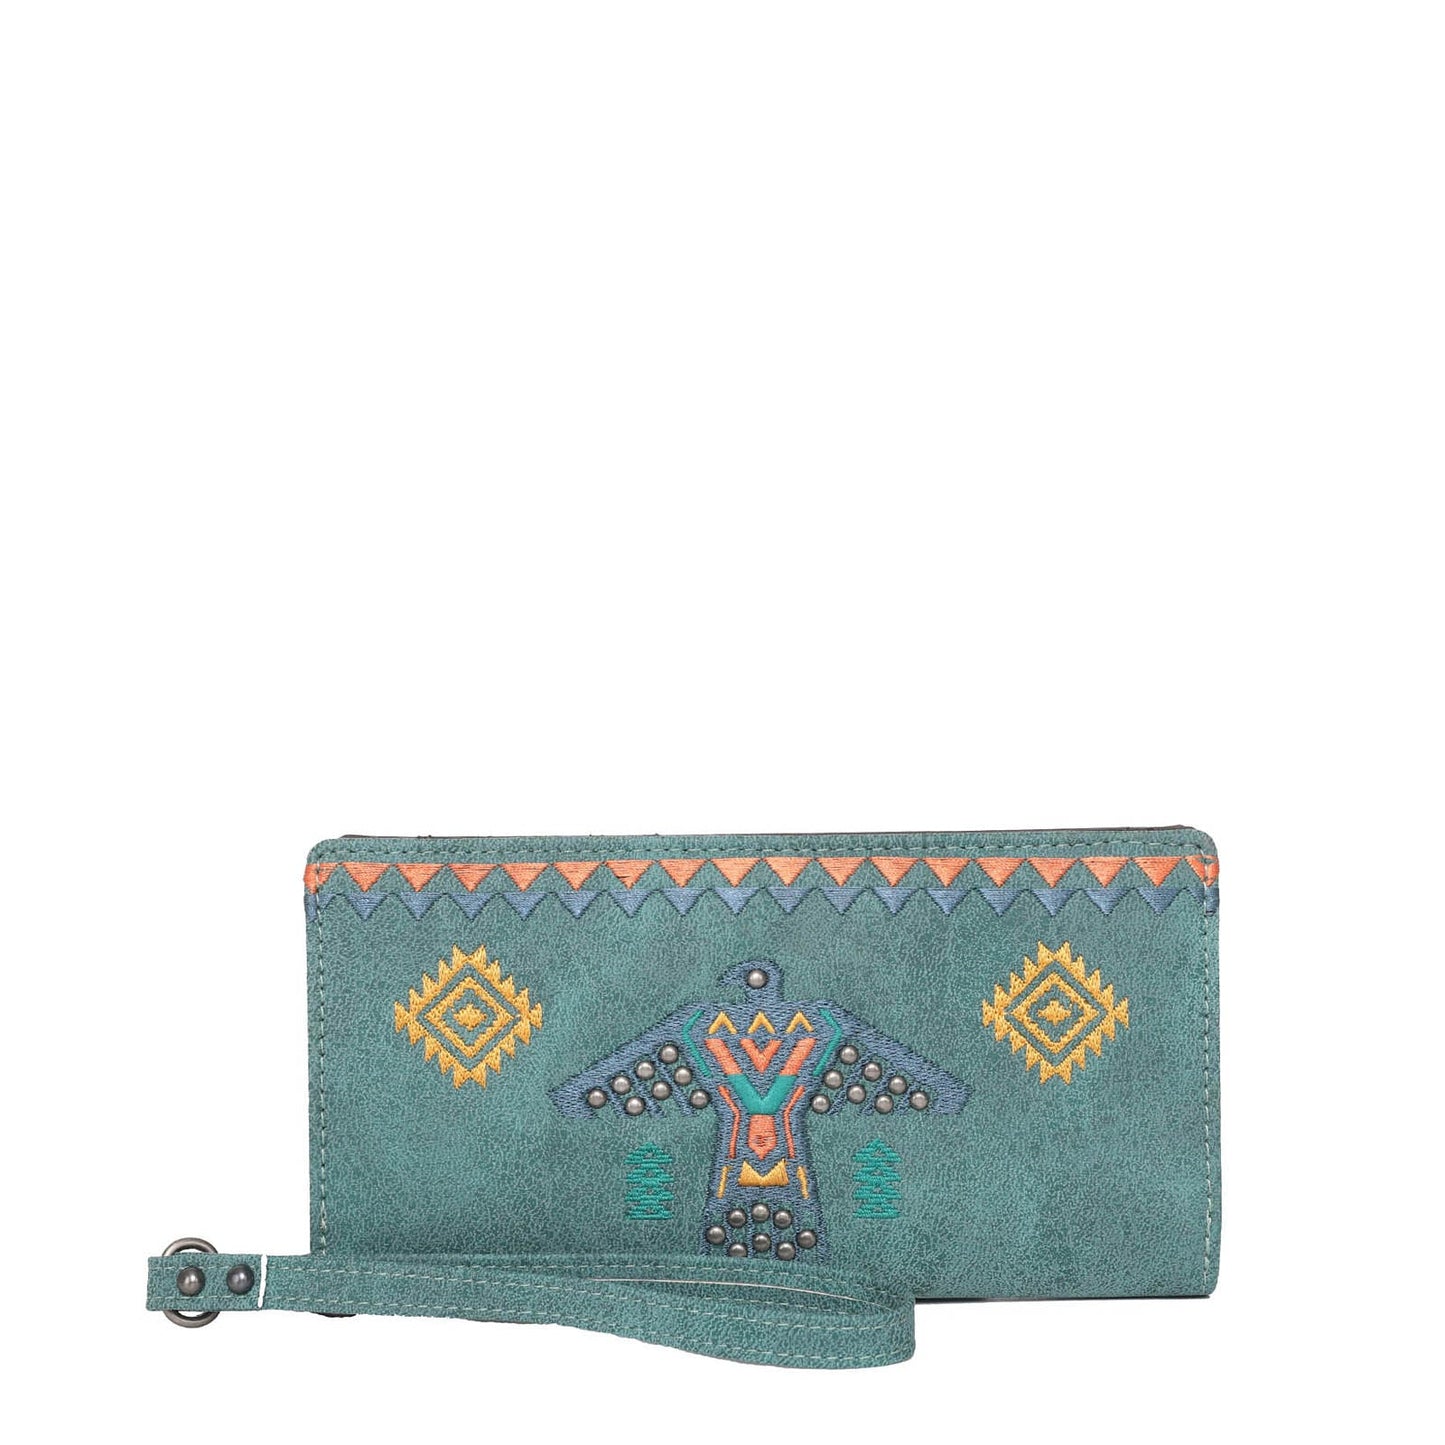 WG36W039 - Wrangler Embroidered Aztec Eagle Fringe Collection Wallet